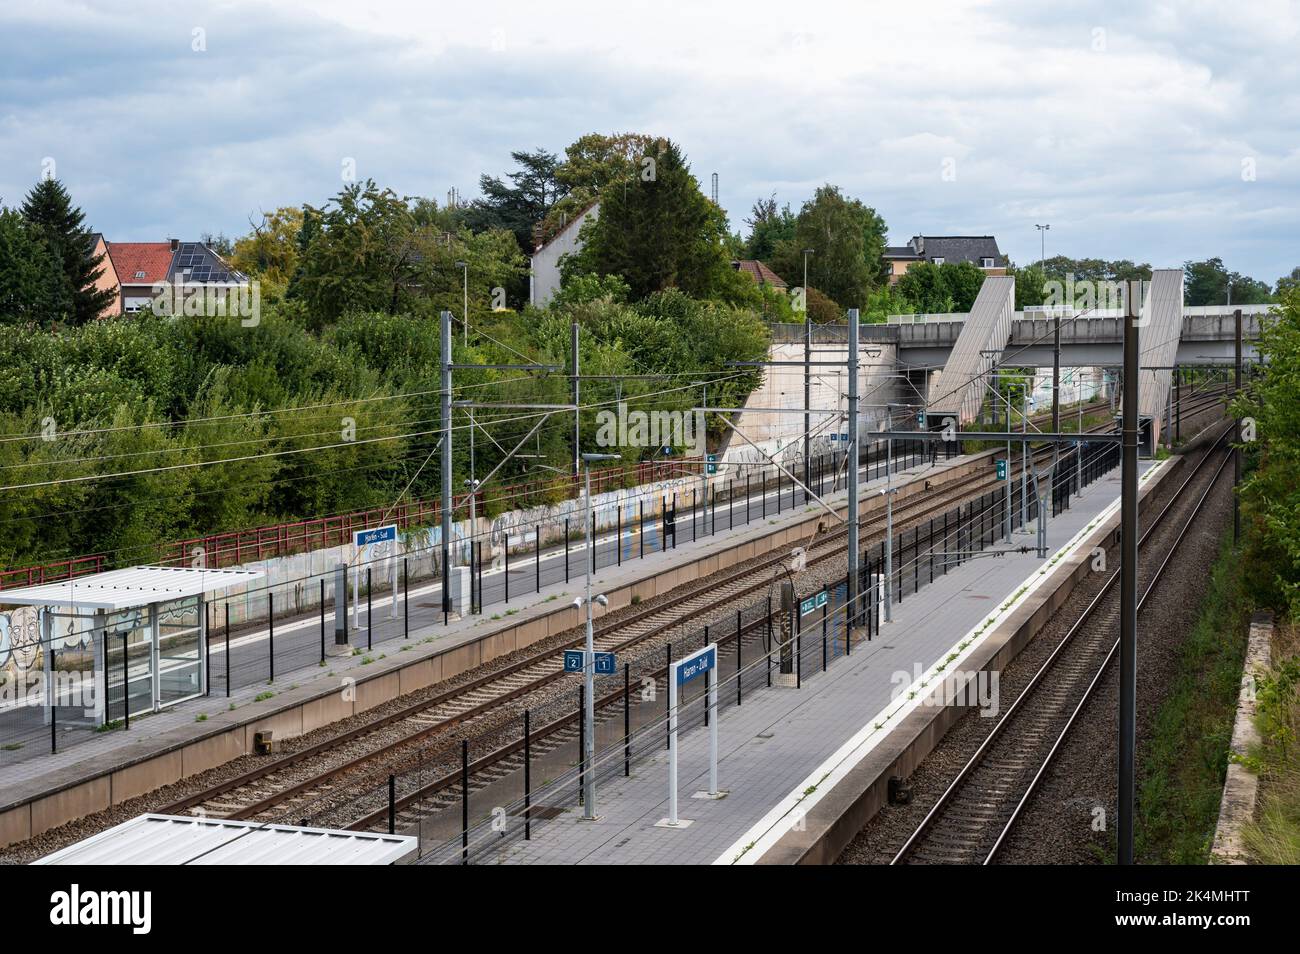 Haren, Brussels Capital Region, Belgium - Railway tracks of the public transportation terminal. Stock Photo